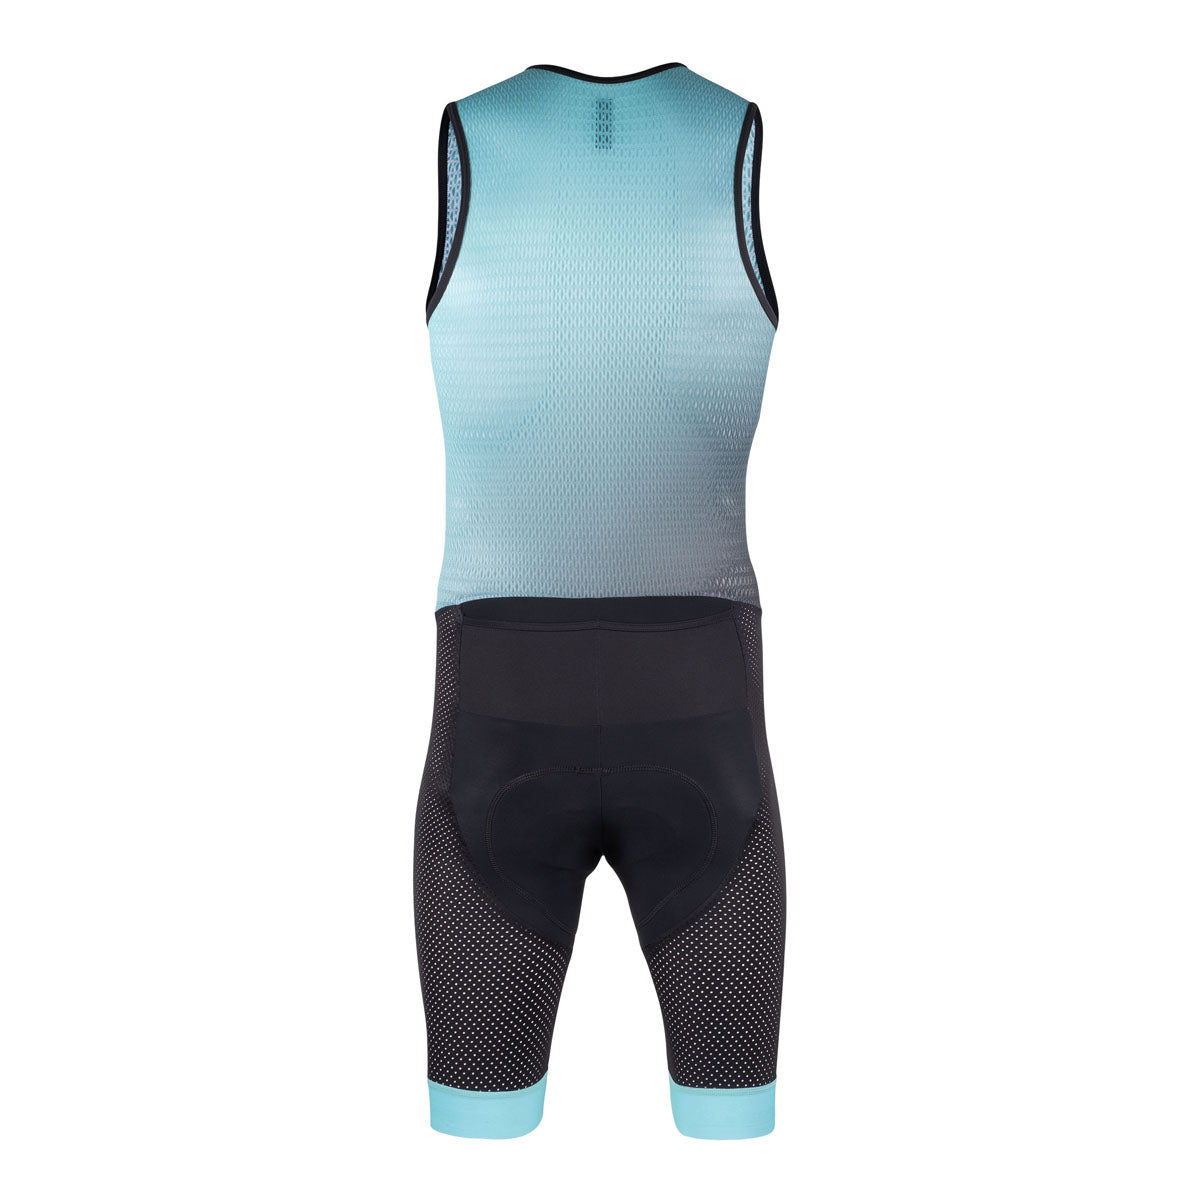 Nalini Men's Triathlon Skinsuit (Turquoise / Black) XS, S, M, L, XL, 2XL, 3XL